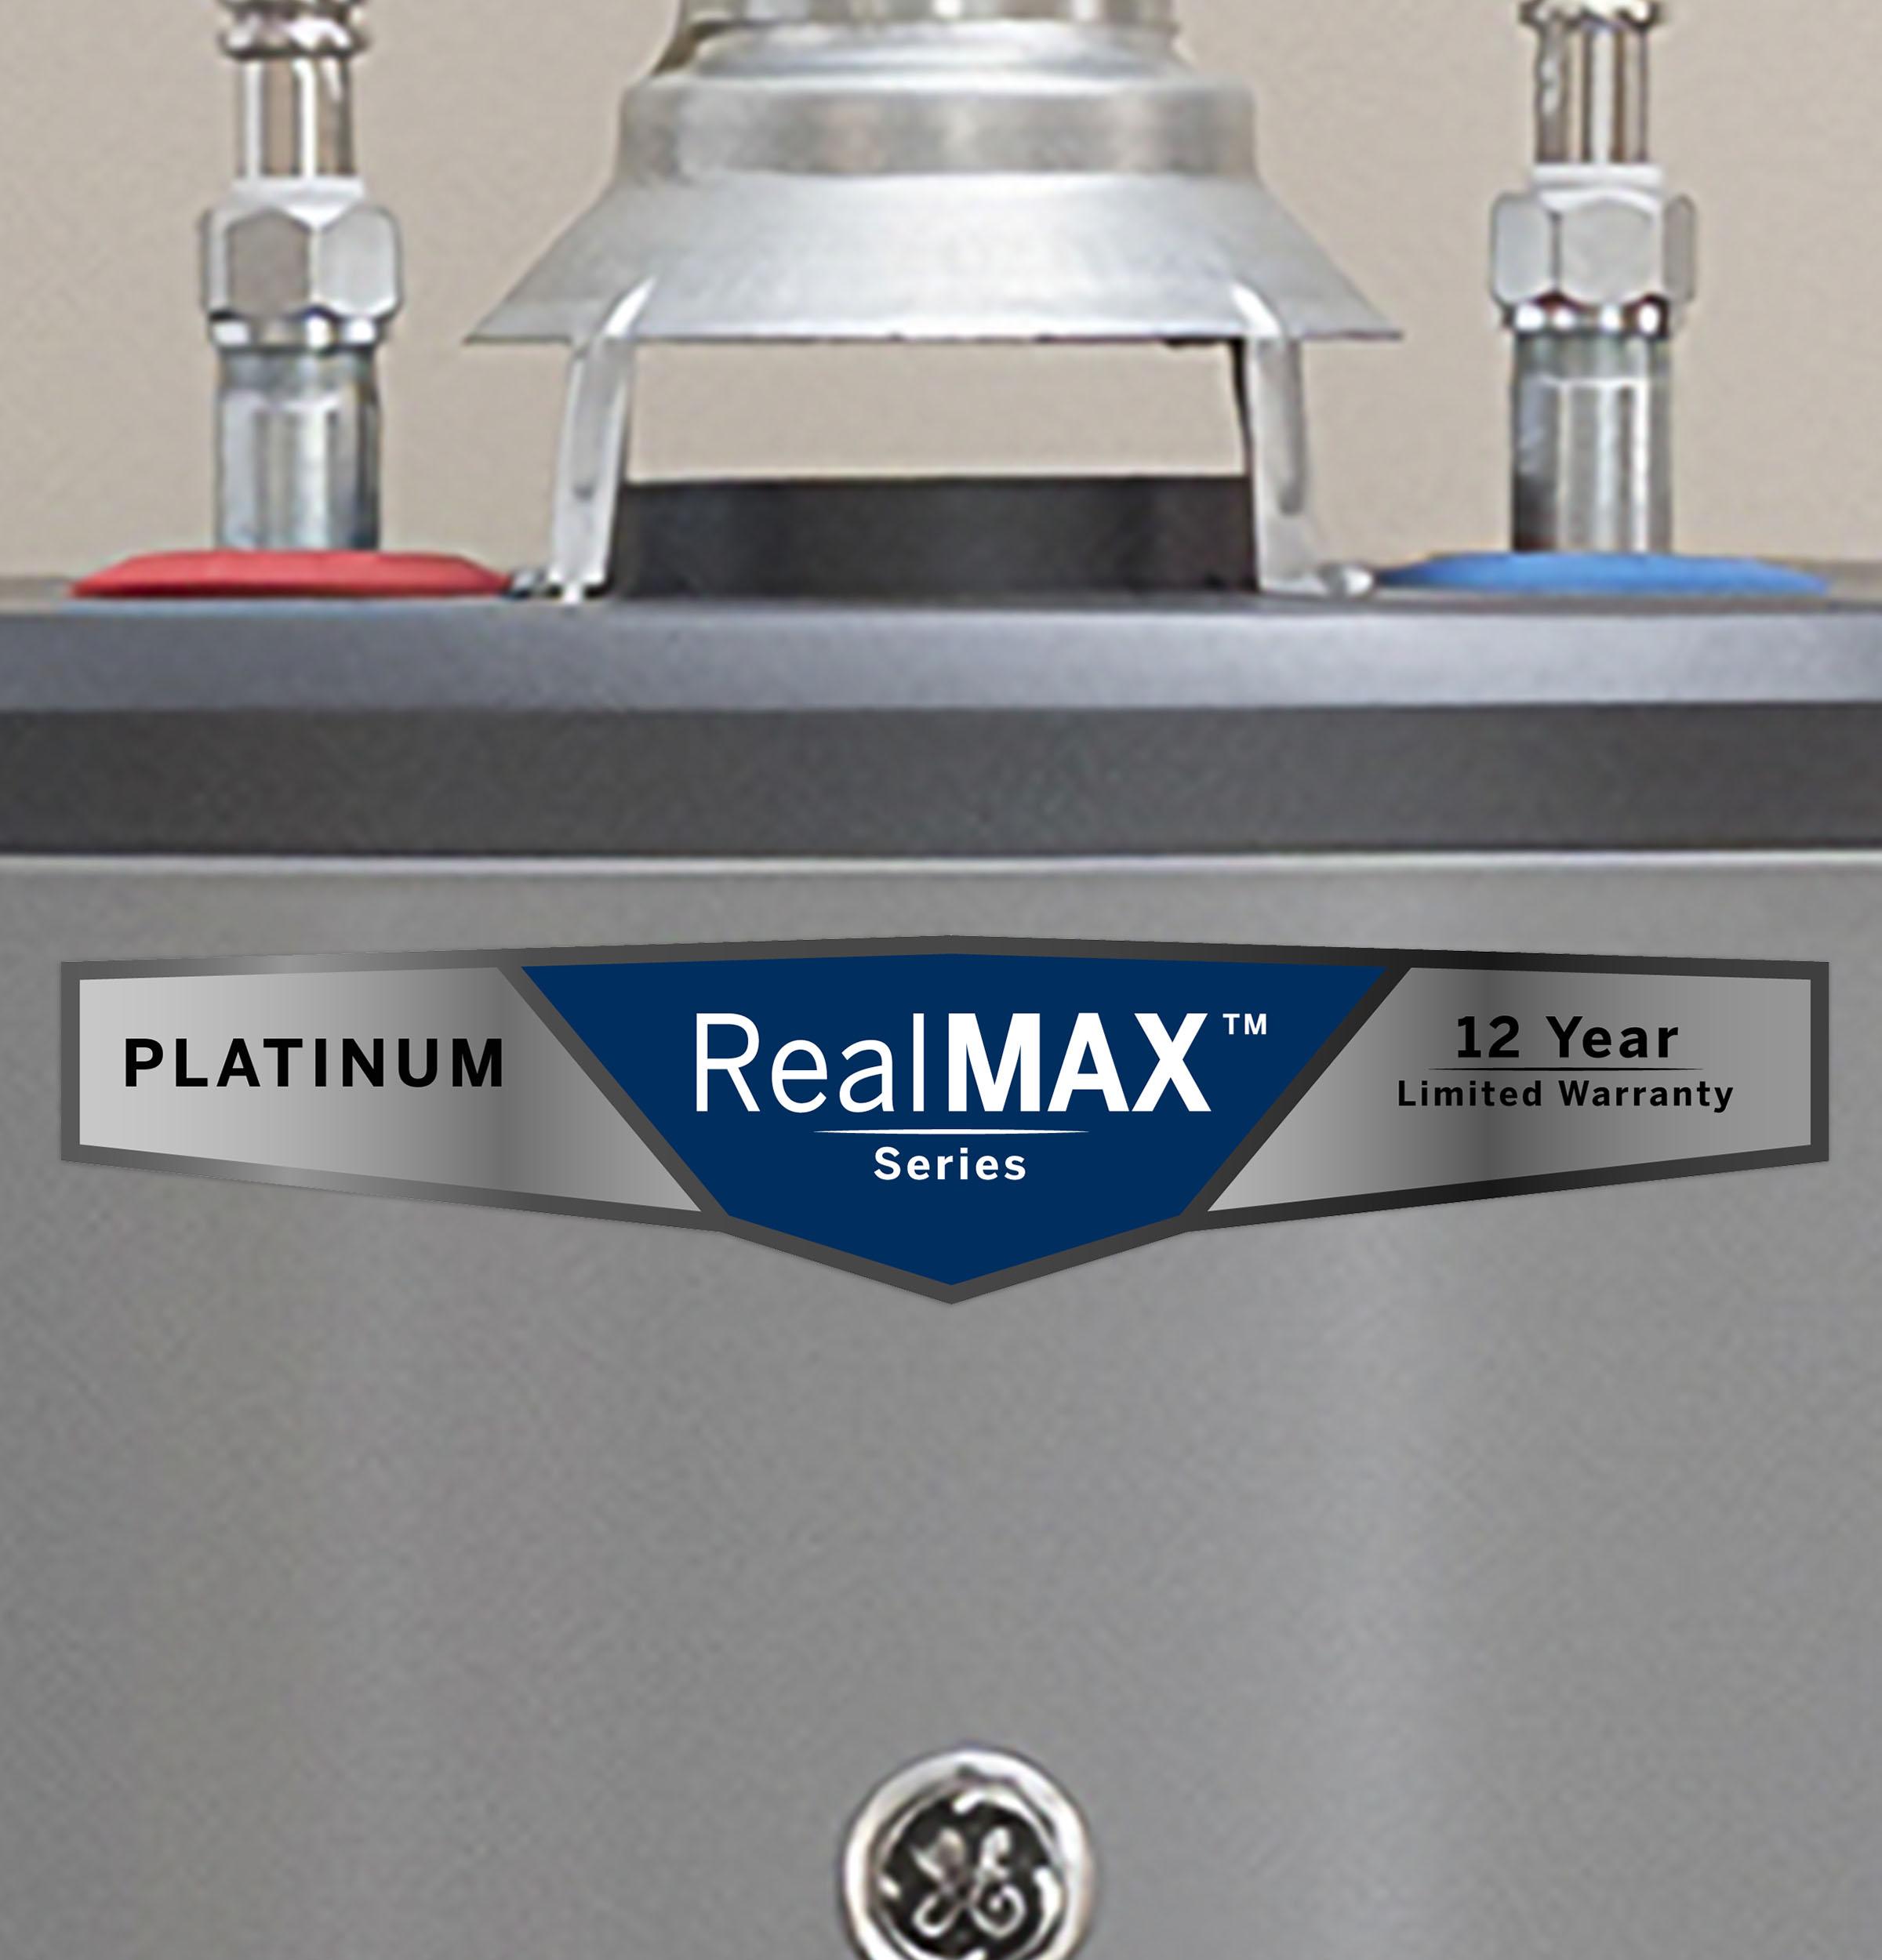 GE RealMAX Platinum 40-Gallon Tall Liquid Propane Atmospheric Water Heater